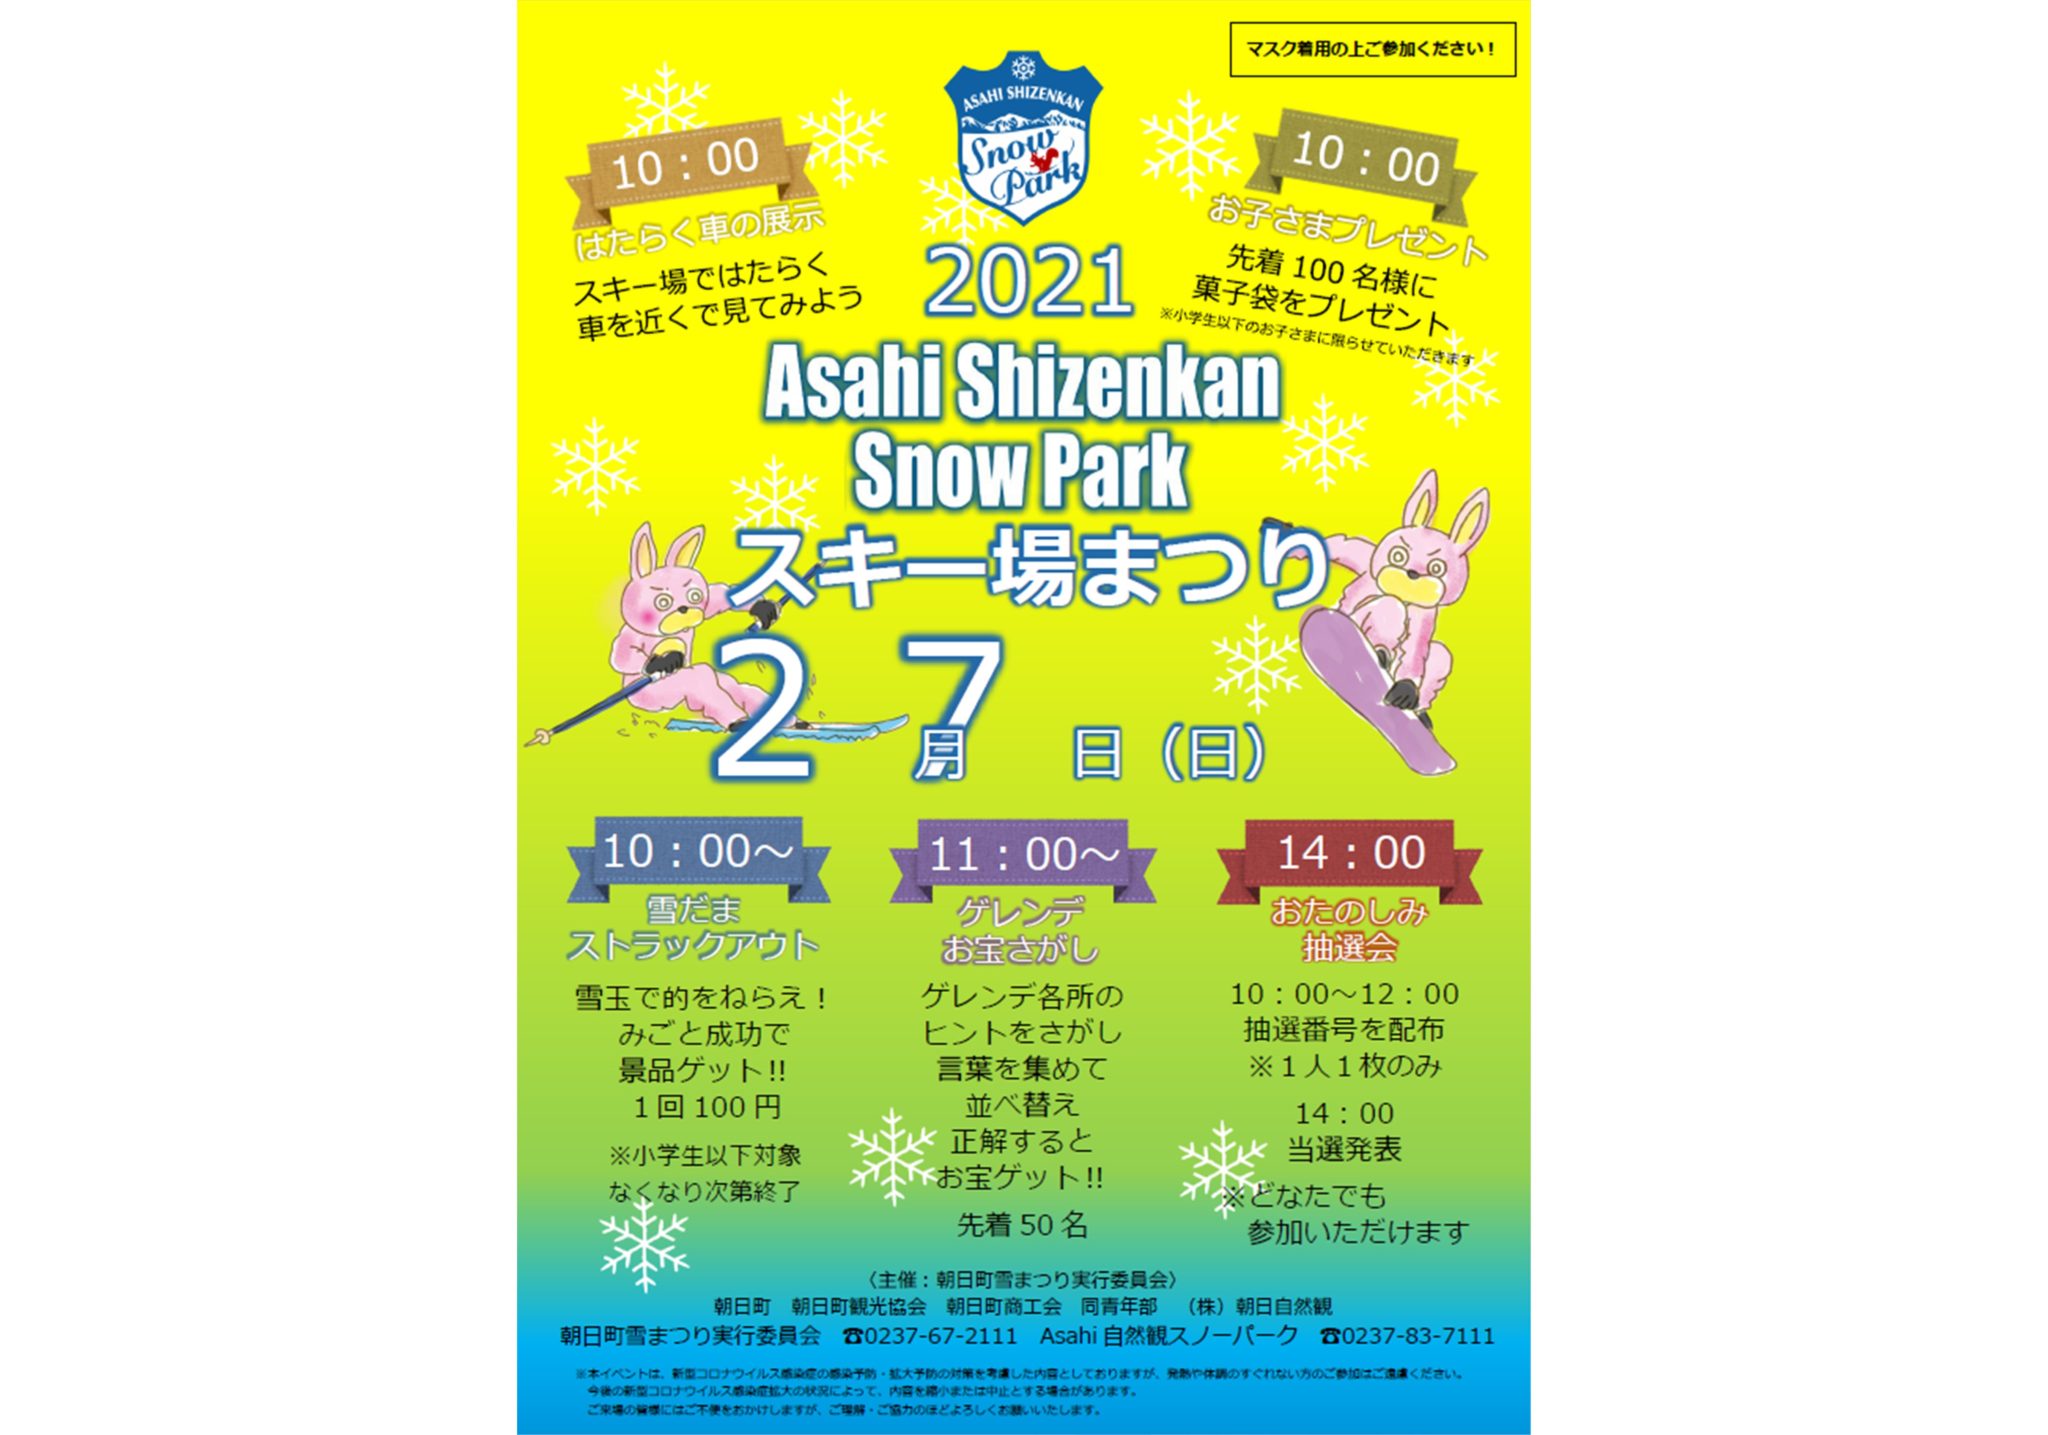 2021 Asahi Shizenkan Snow Park スキー場まつり